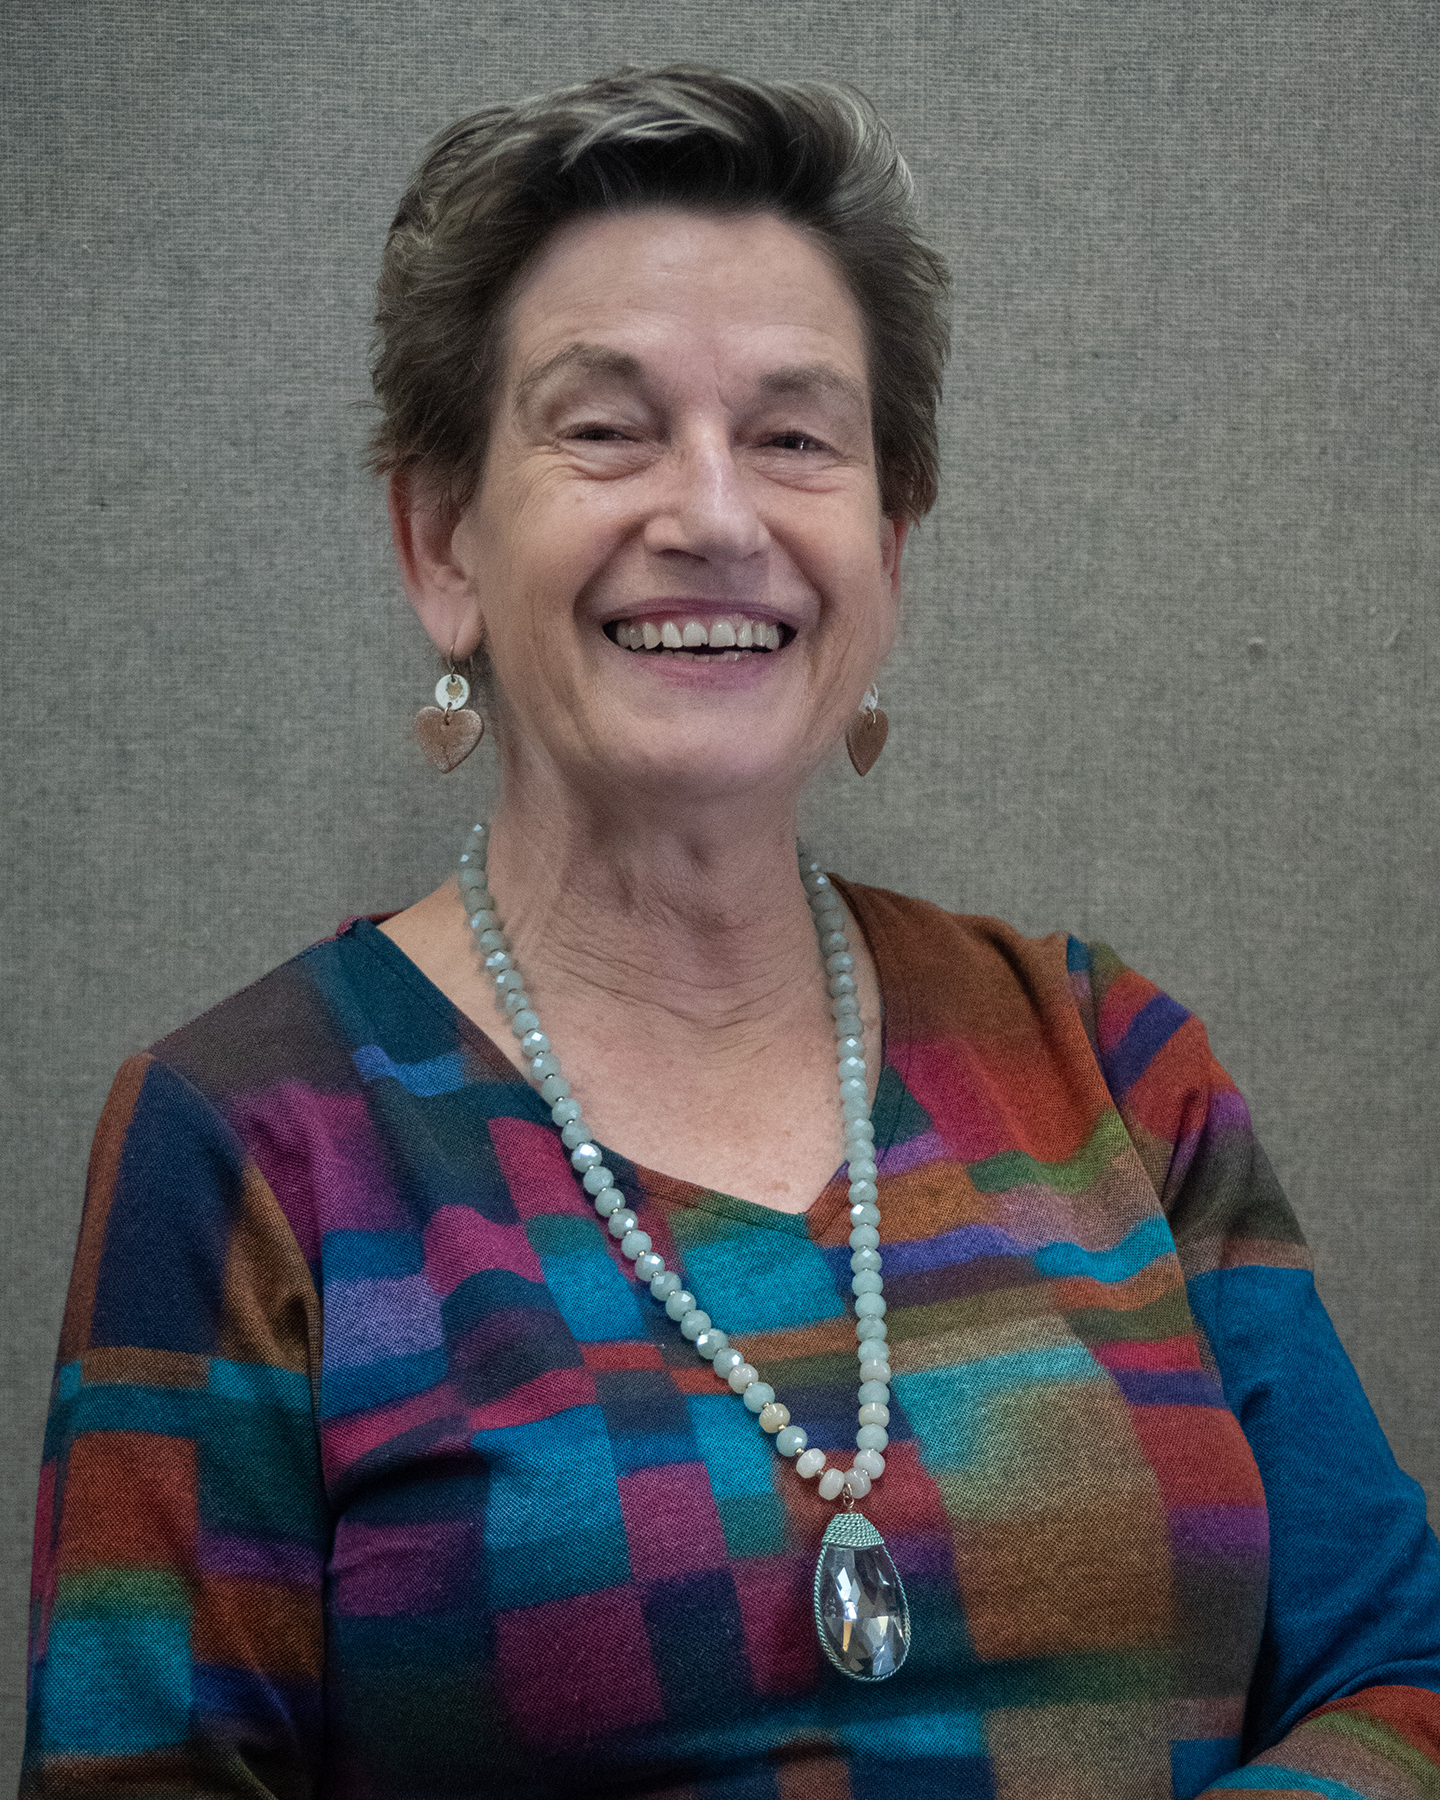 A smiling mature woman, Ute DeFarlo, Director of Development at Shakespeare & Company